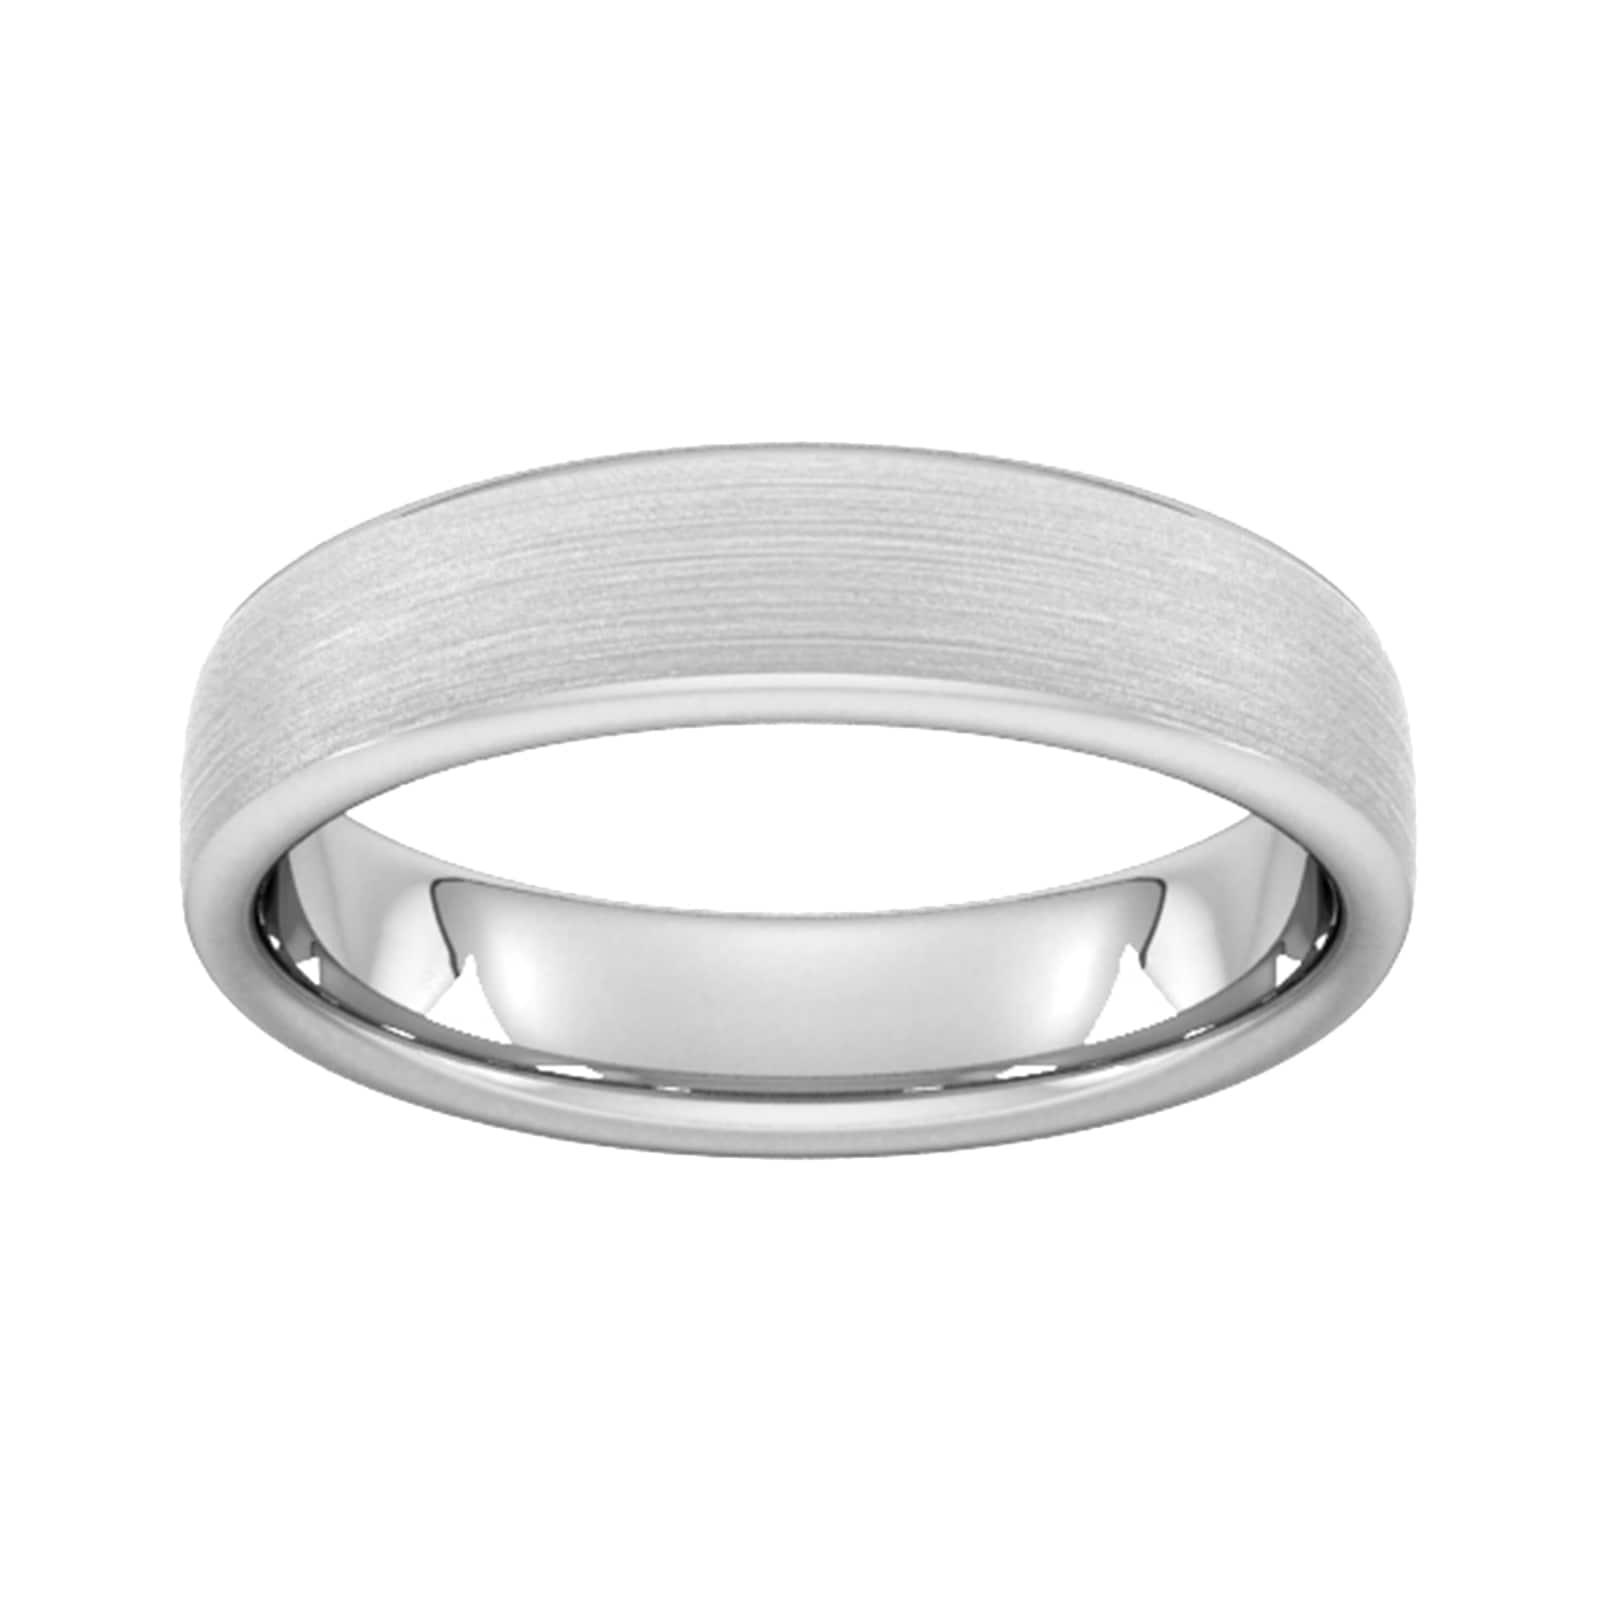 5mm D Shape Standard Matt Finished Wedding Ring In 18 Carat White Gold - Ring Size O